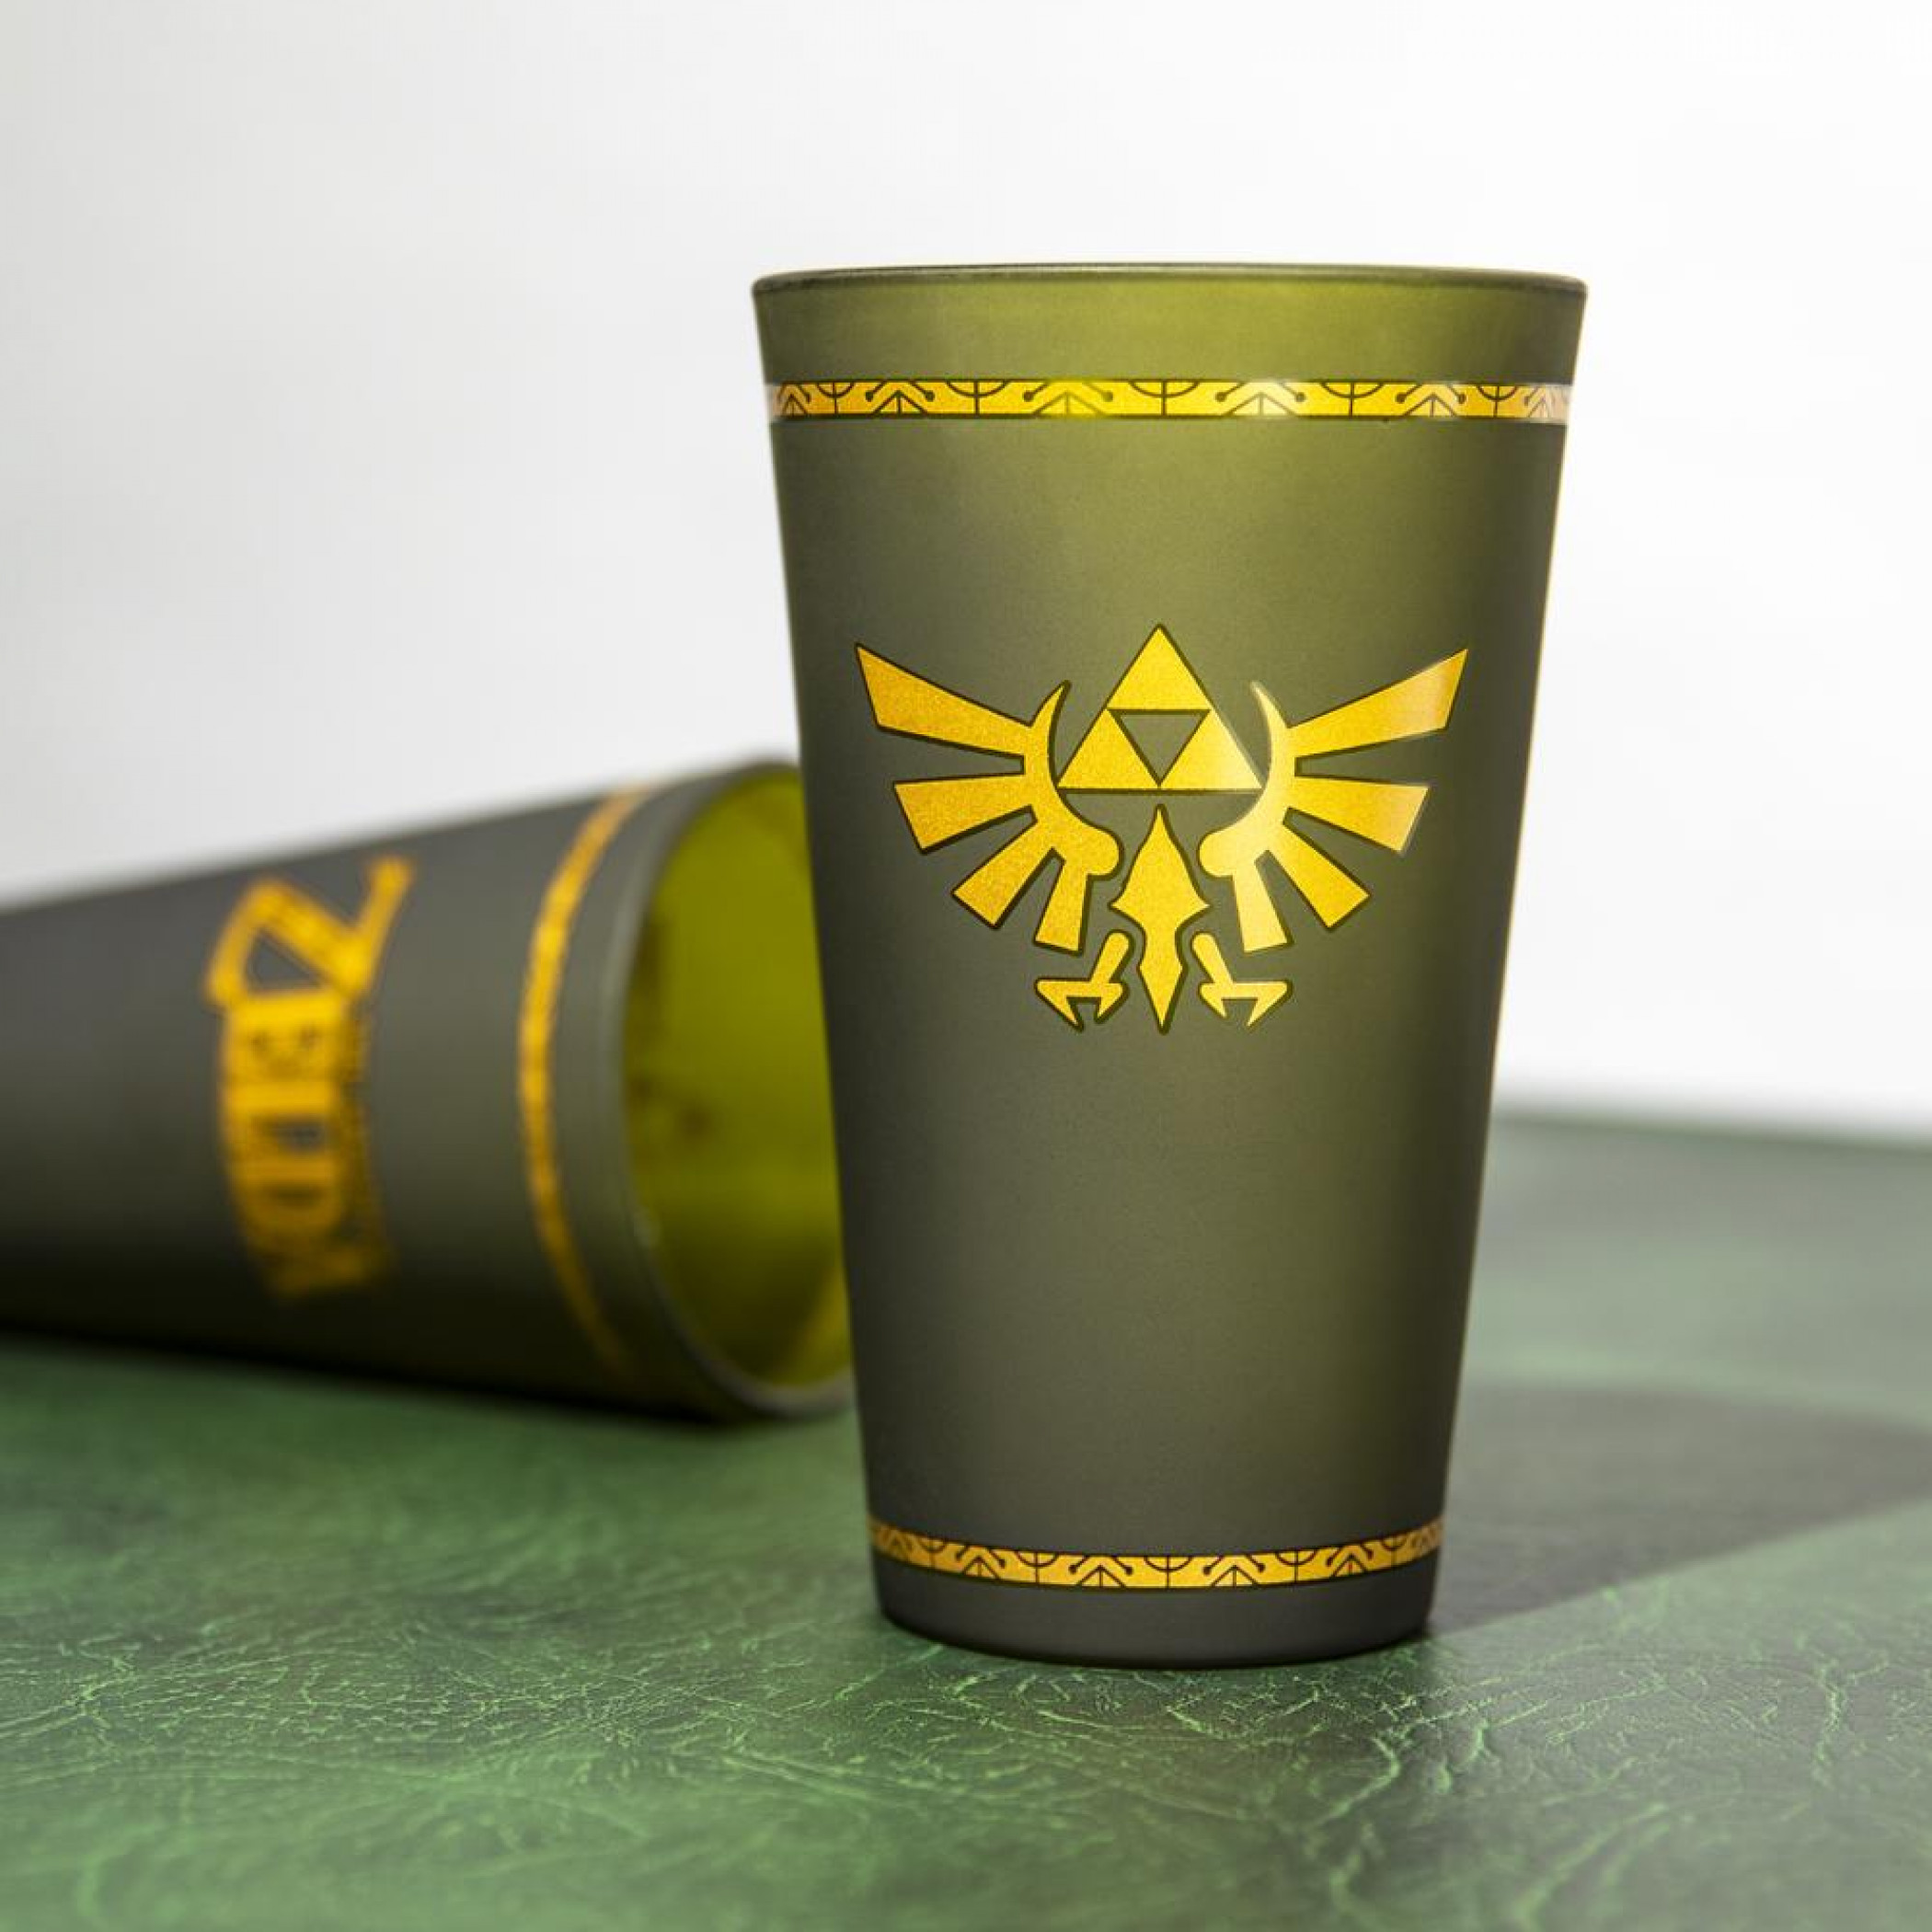 The Legend of Zelda Hyrule Crest Pint Glass